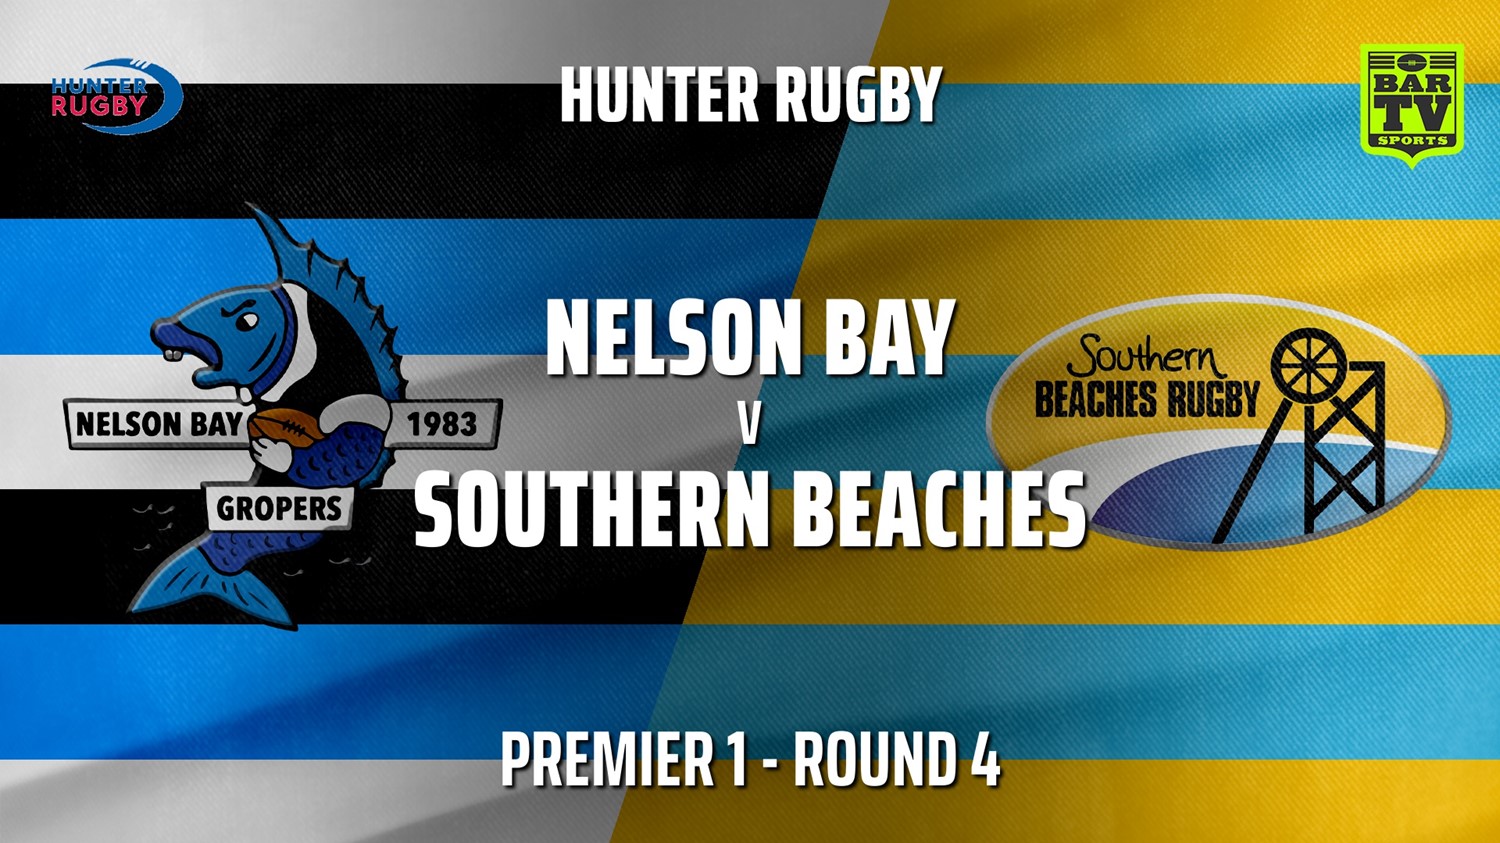 210508-HRU Round 4 - Premier 1 - Nelson Bay Gropers v Southern Beaches Slate Image